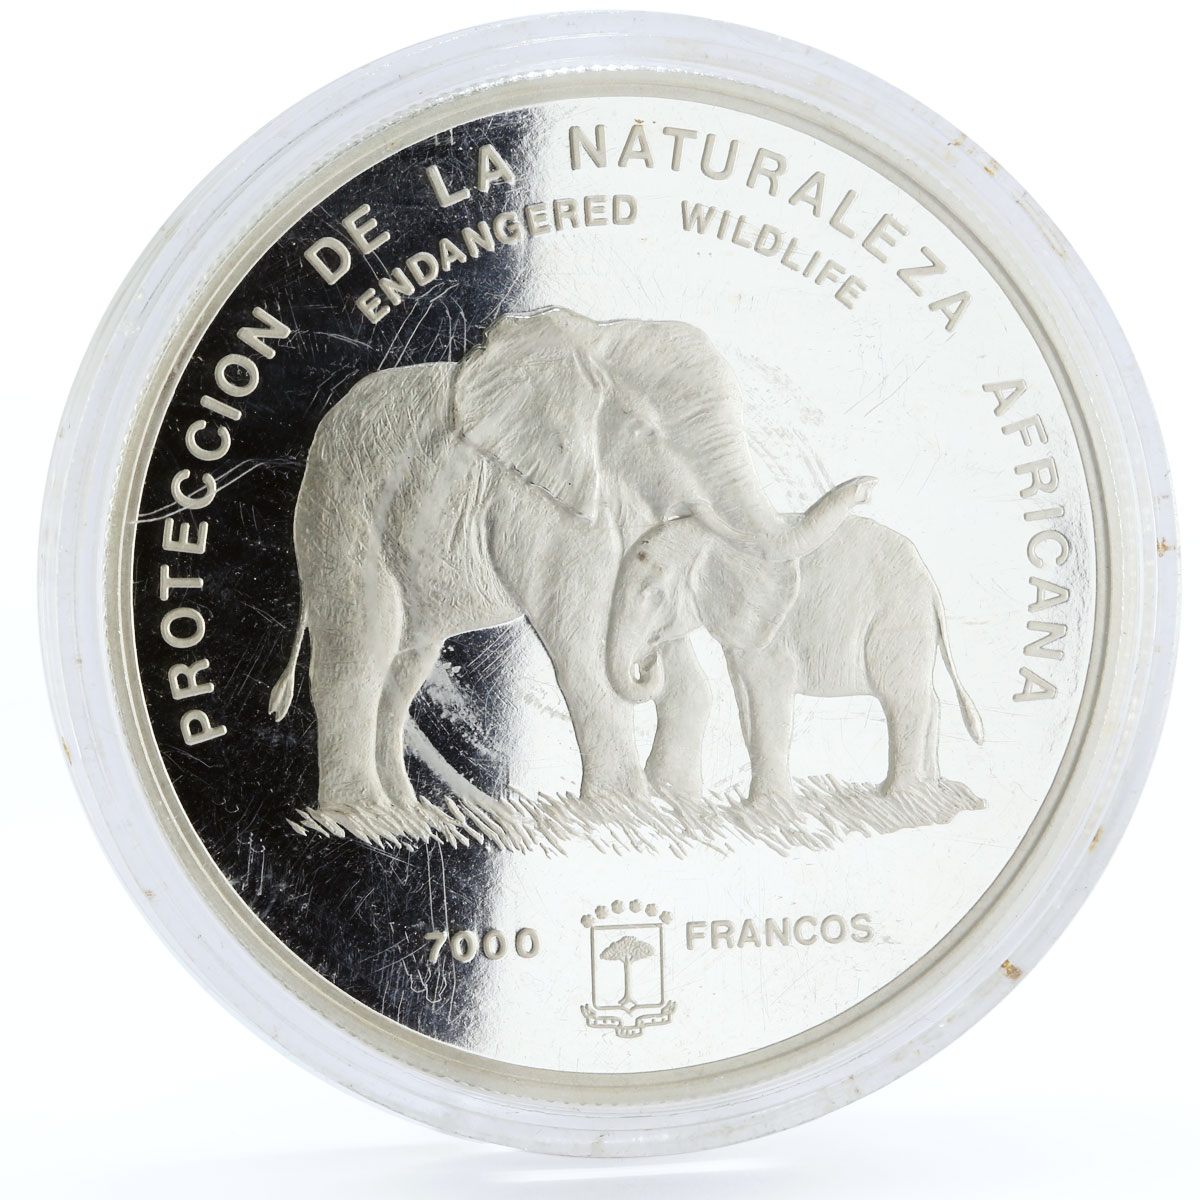 Equatorial Guinea 7000 francos Endangered Wildlife Elephants silver coin 1995